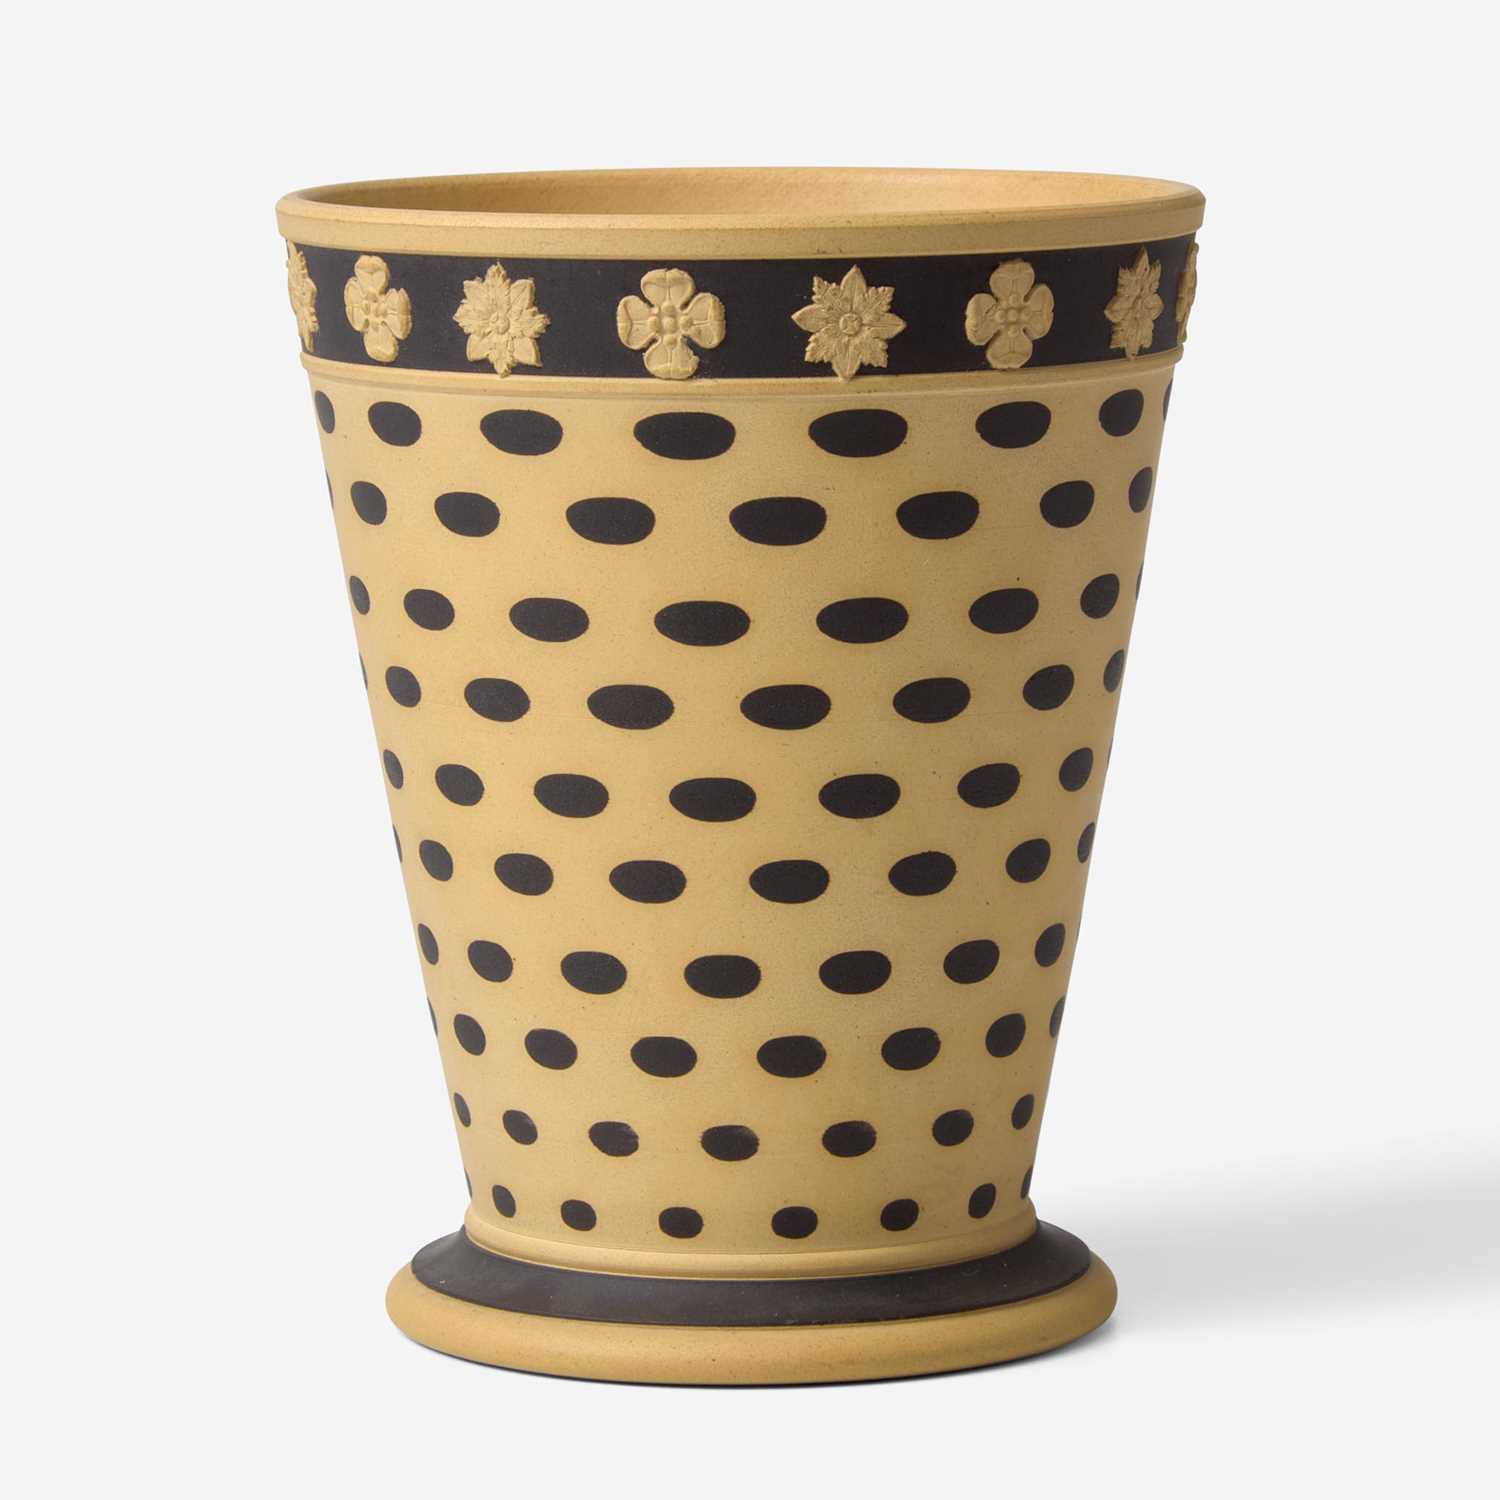 Lot 31 - A Wedgwood Black Basalt-Decorated Caneware Posy Pot Vase